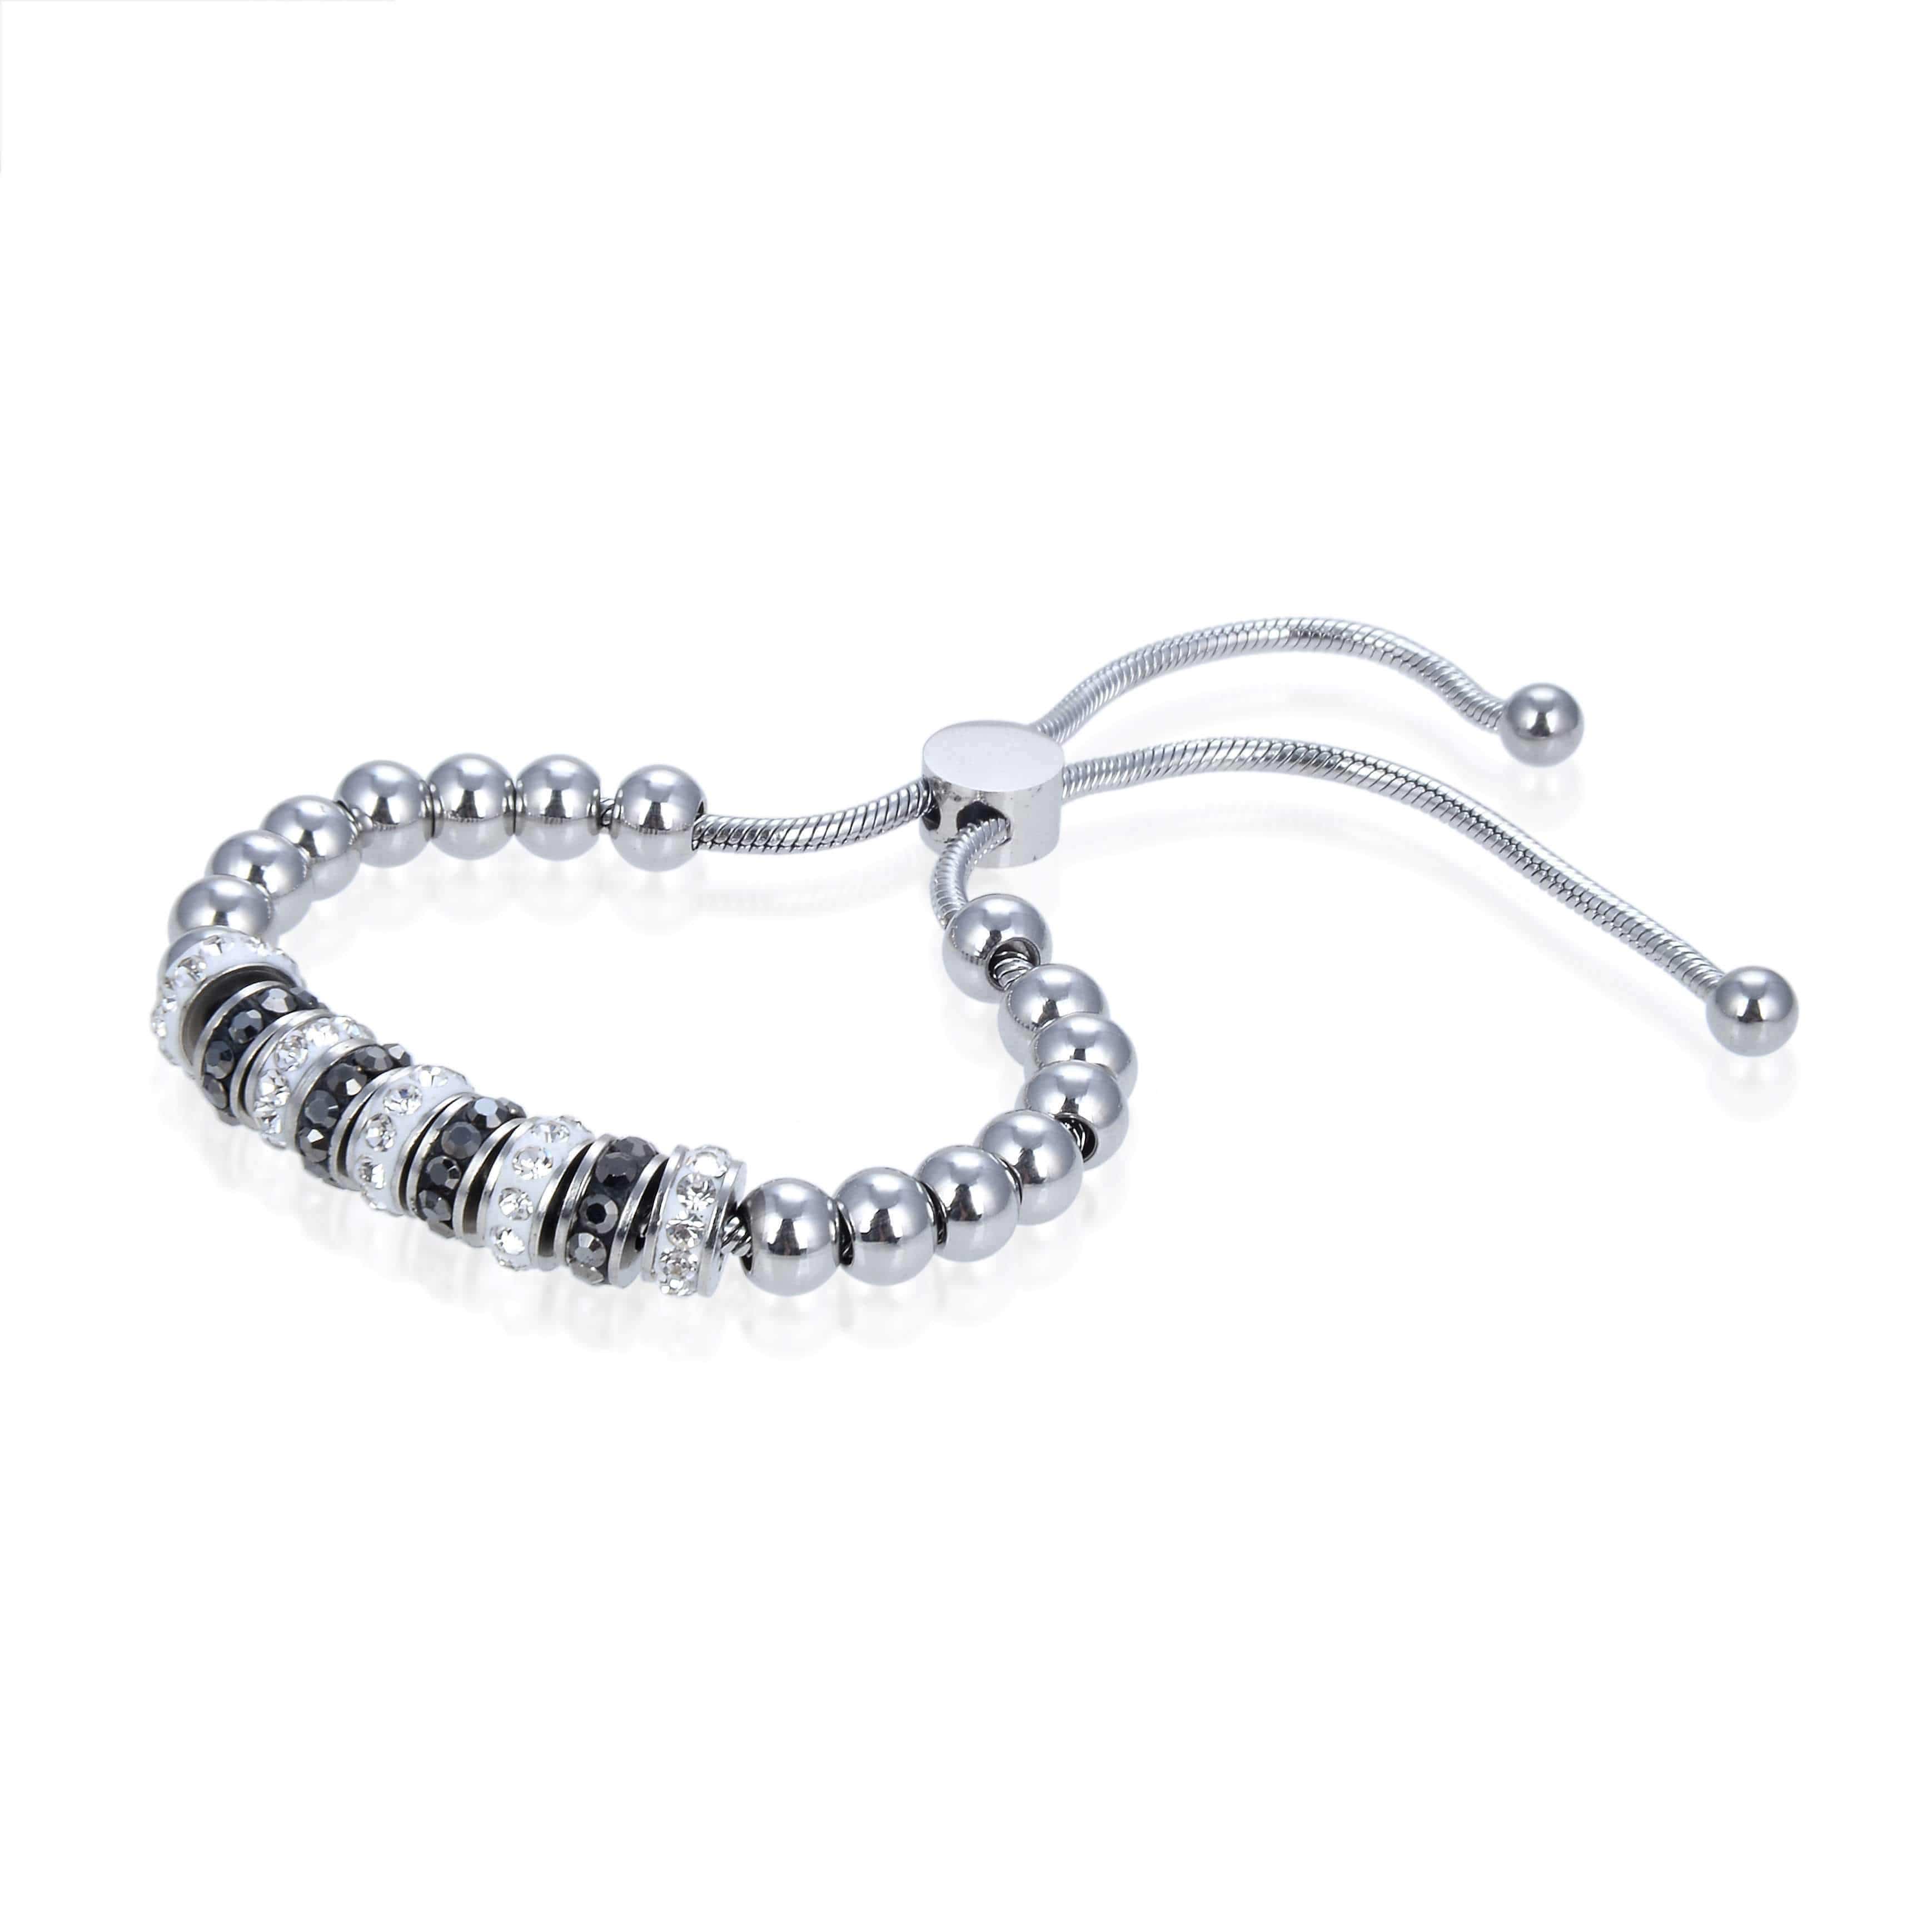 Kalifano Steel Hearts Jewelry Steel Hearts Round Metal and Diamond Studded Beads Adjustable Bracelet SHB200-47